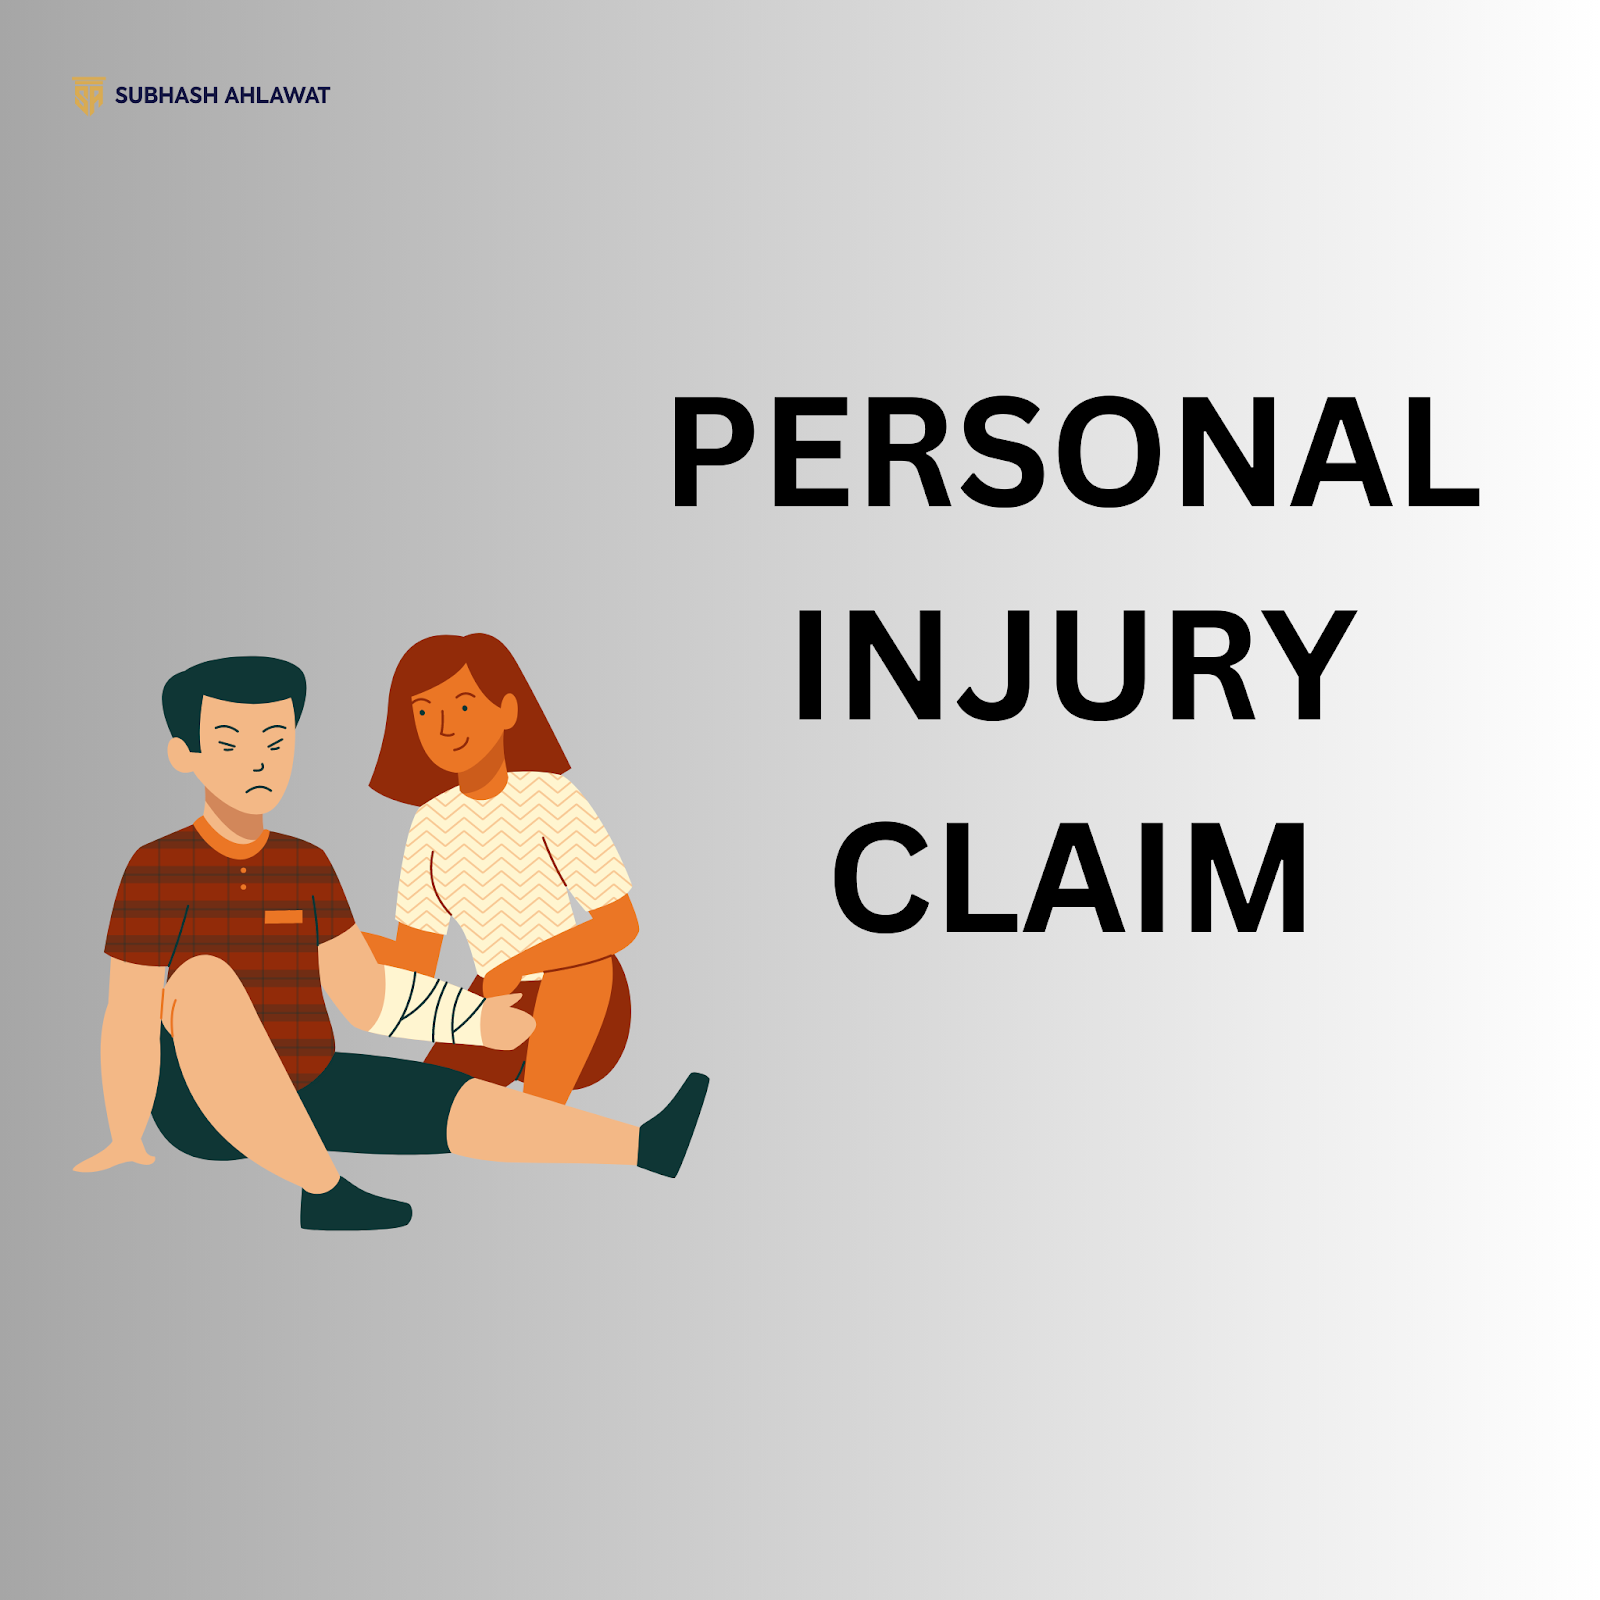 Personal injury claim
